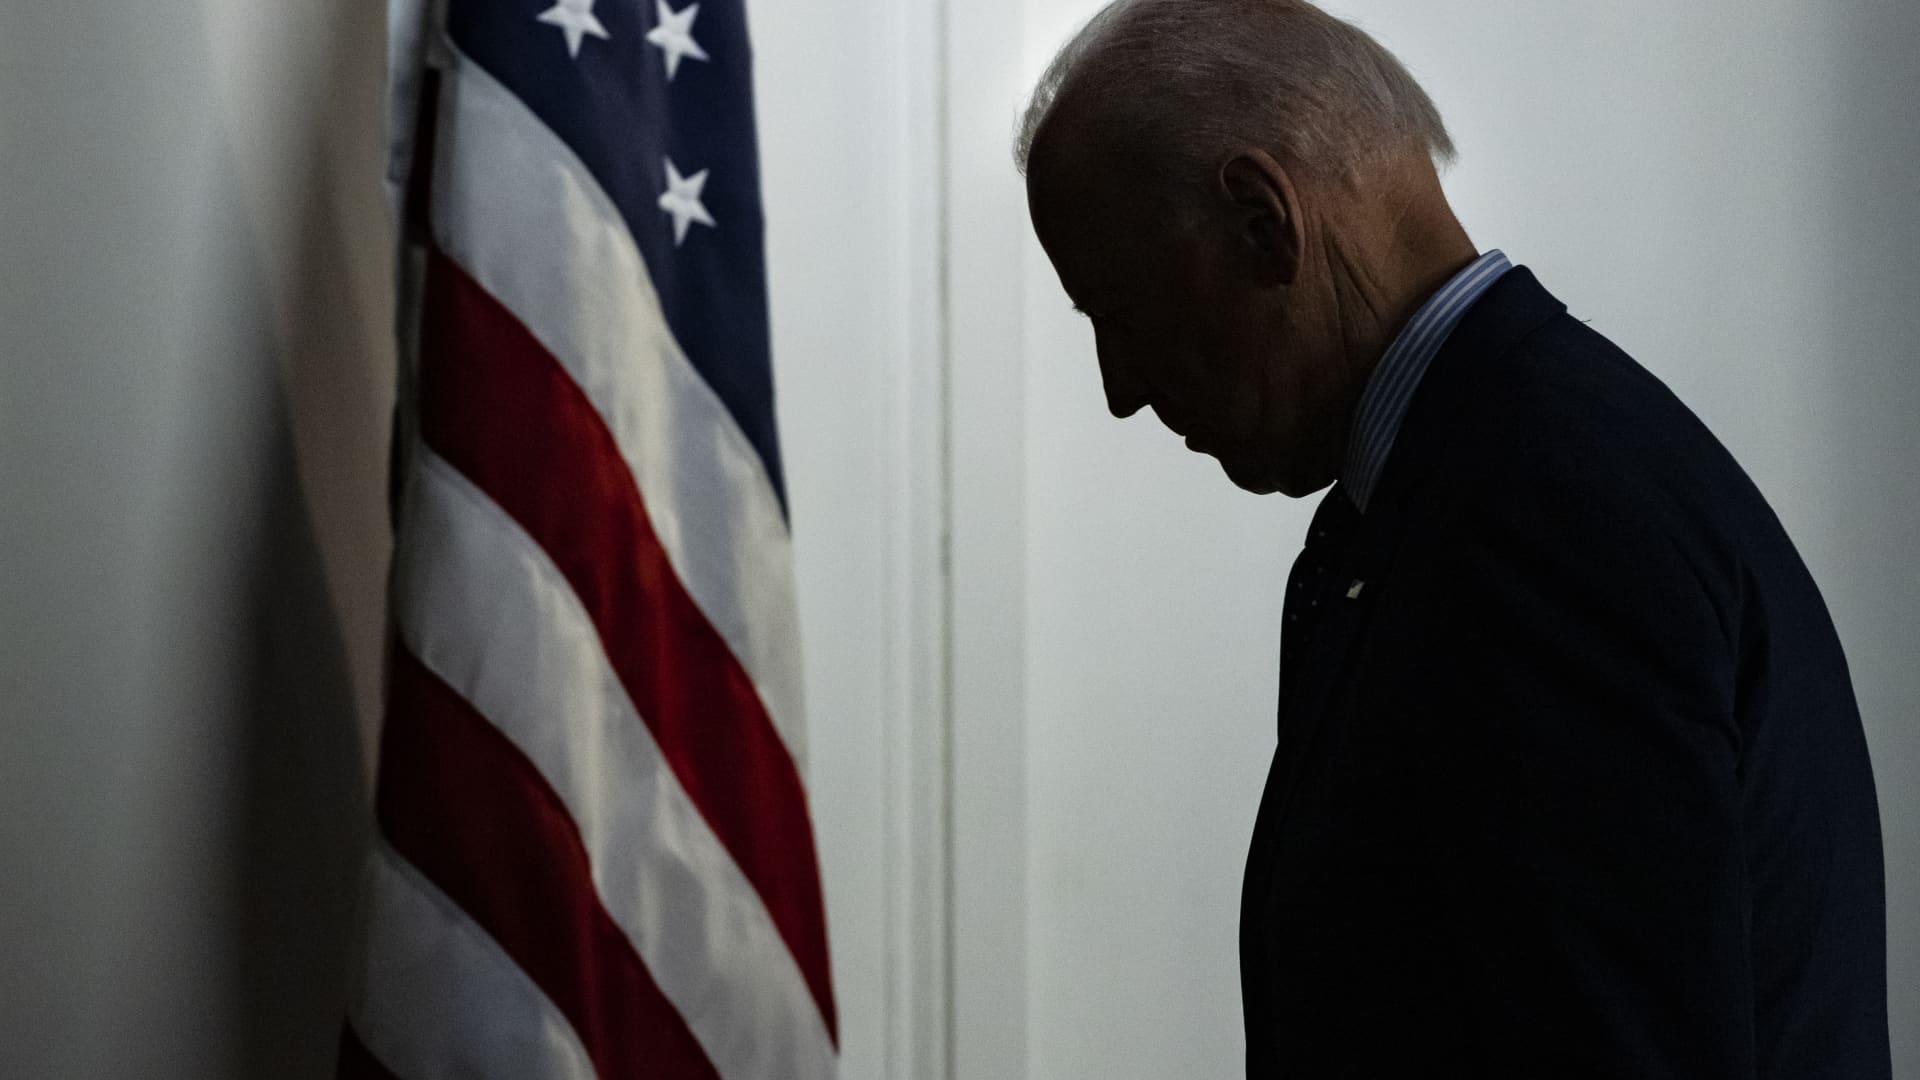 U.S. President Joe Biden departs after speaking in the Eisenhower Executive Office Building in Washington, D.C., on Wednesday, June 2, 2021.